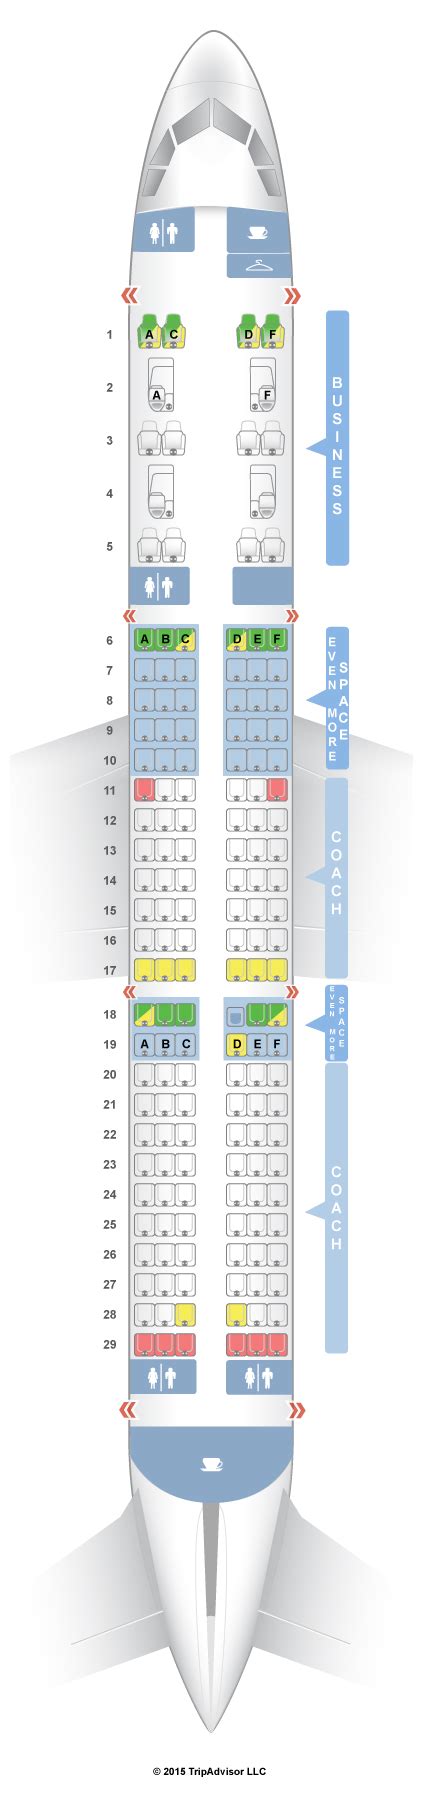 Jetblue A320 Seating Chart